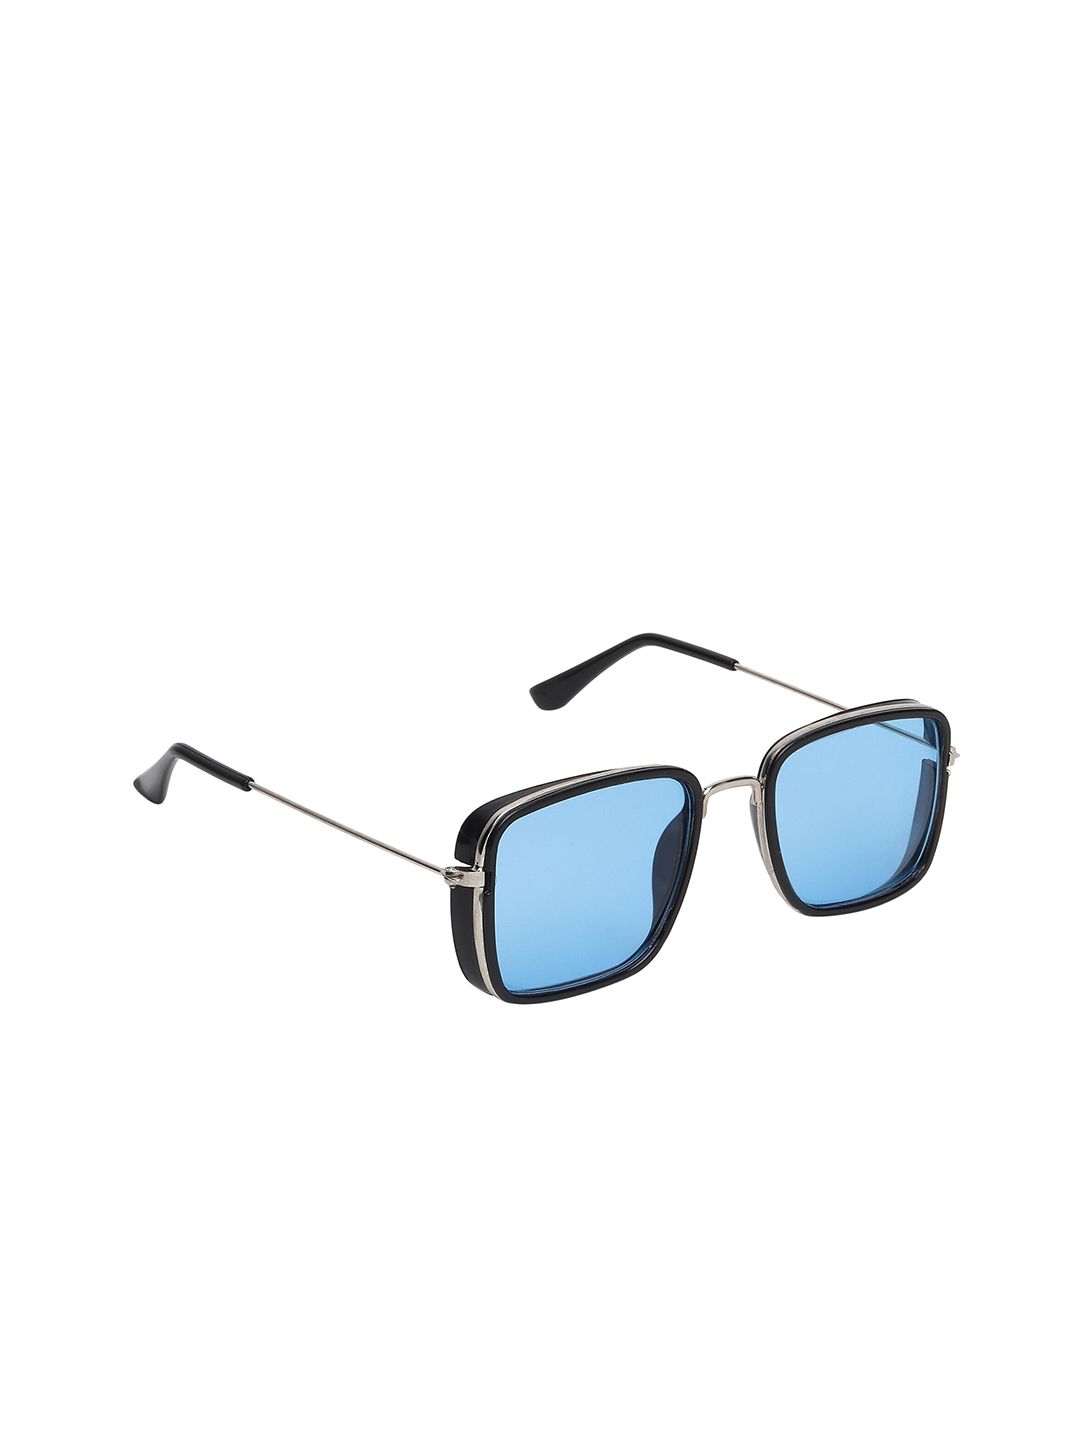 ALIGATORR Unisex Blue Lens & Gold-Toned Square Sunglasses with UV Protected Lens Price in India